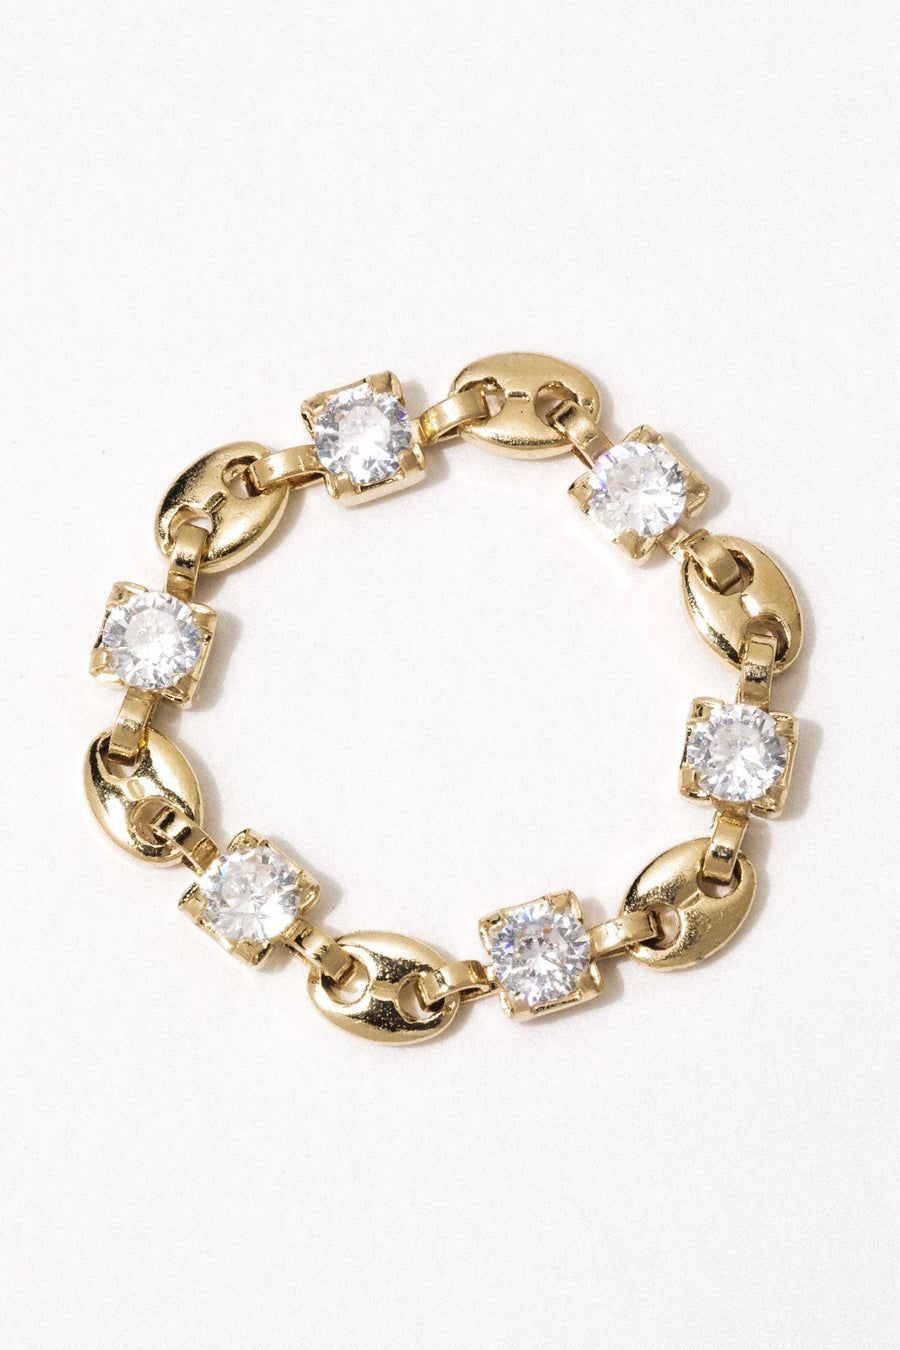 Goddess Jewelry CZ Chain Ring